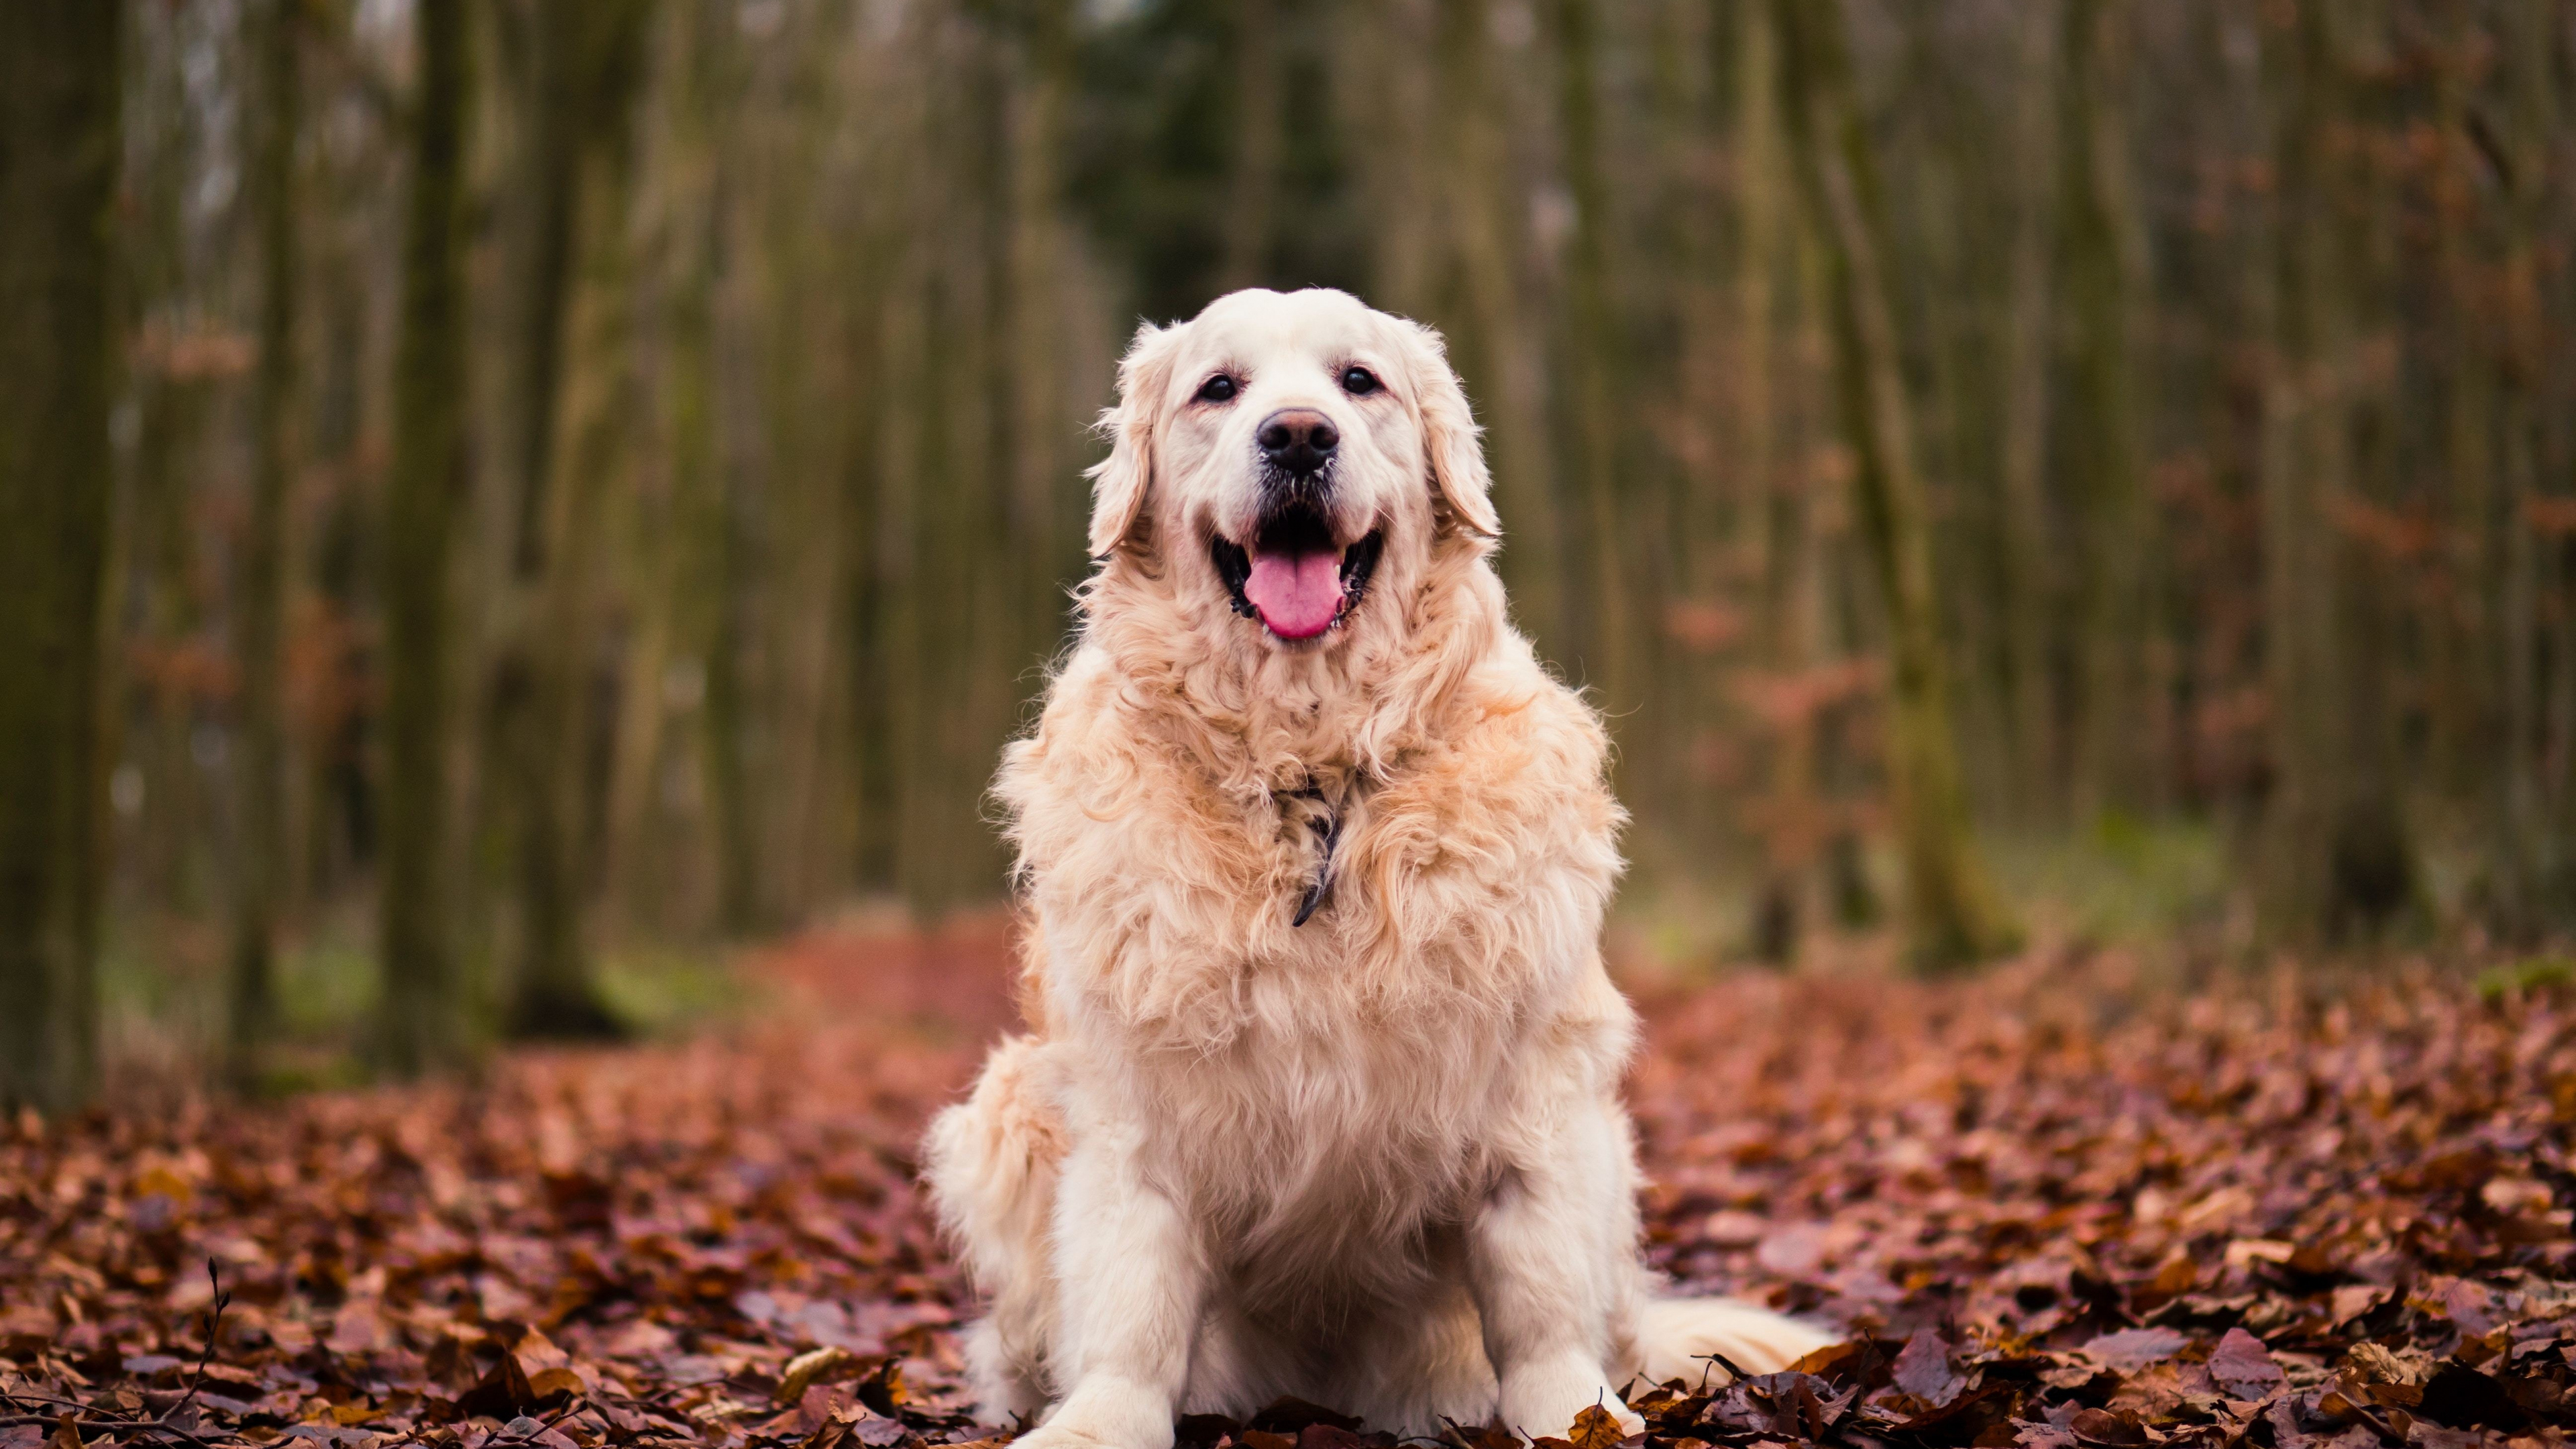 Desktop Wallpaper Golden Retriever Dog Calm Outdoor 4k Hd Image  Picture Background E1f64b